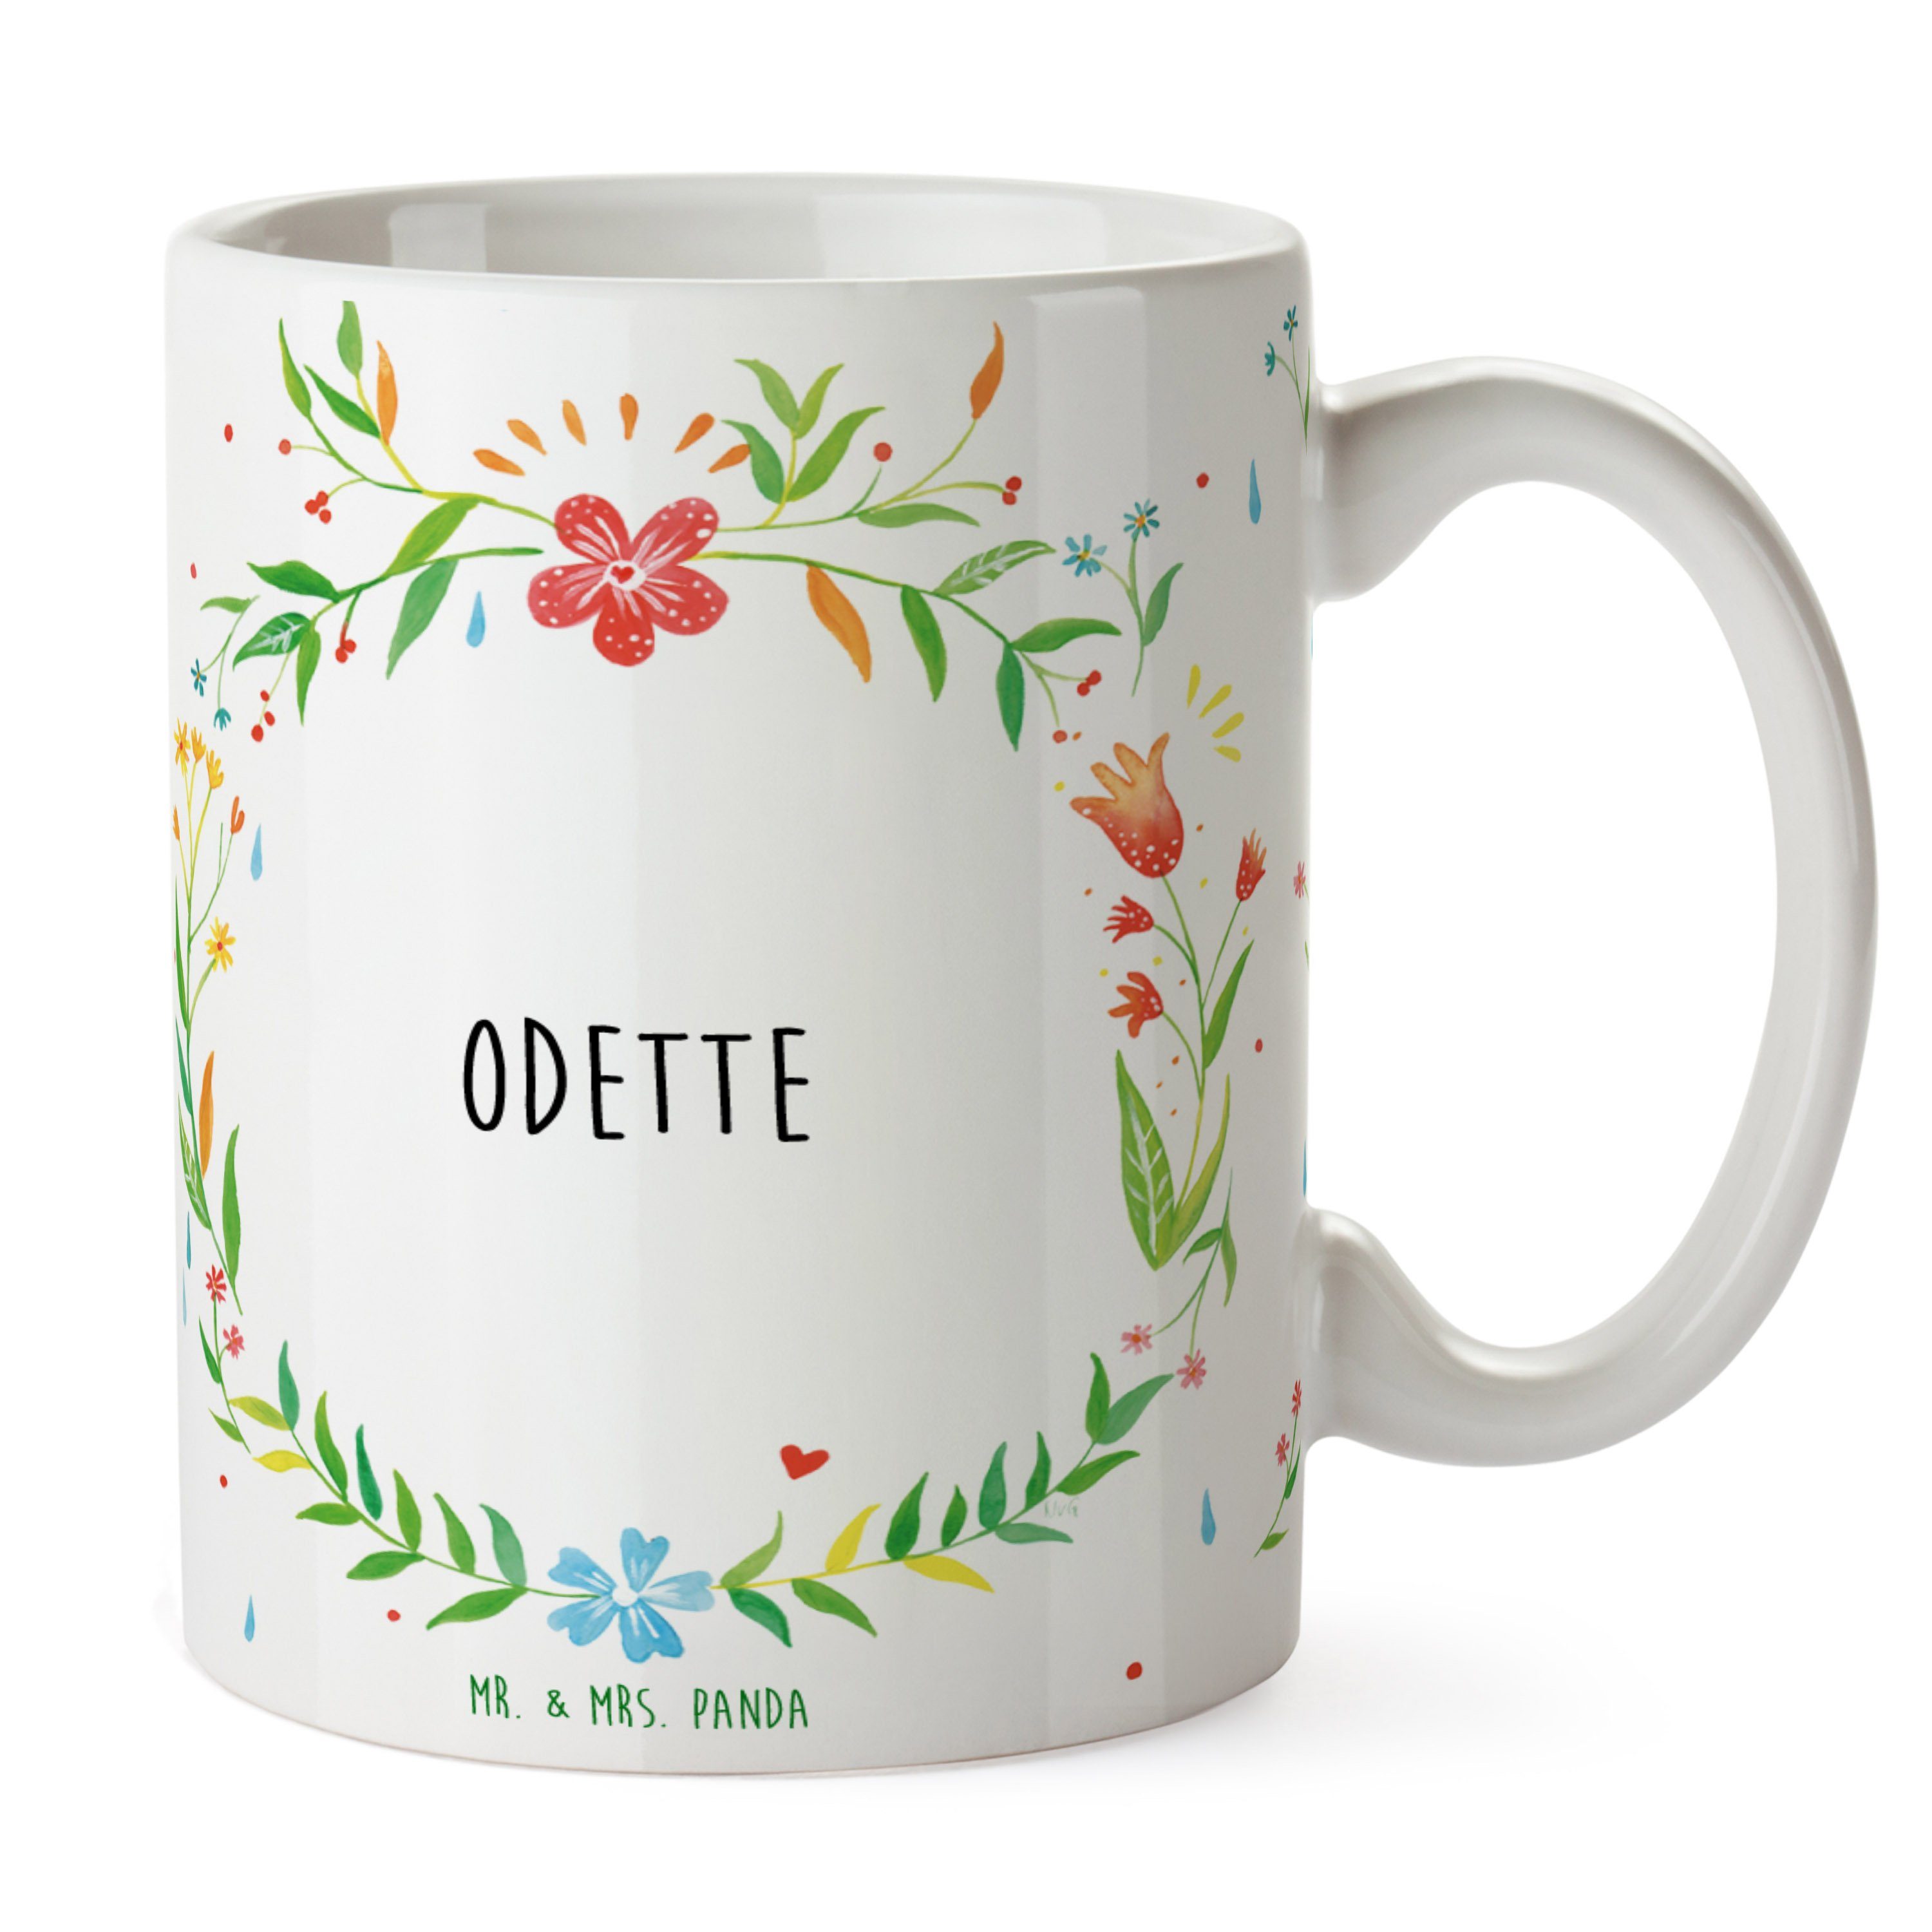 Mr. & Mrs. Panda Geschenk Tasse Odette Keramik - Tass, Geschenk, Kaffeetasse, Tasse Motive, Teetasse